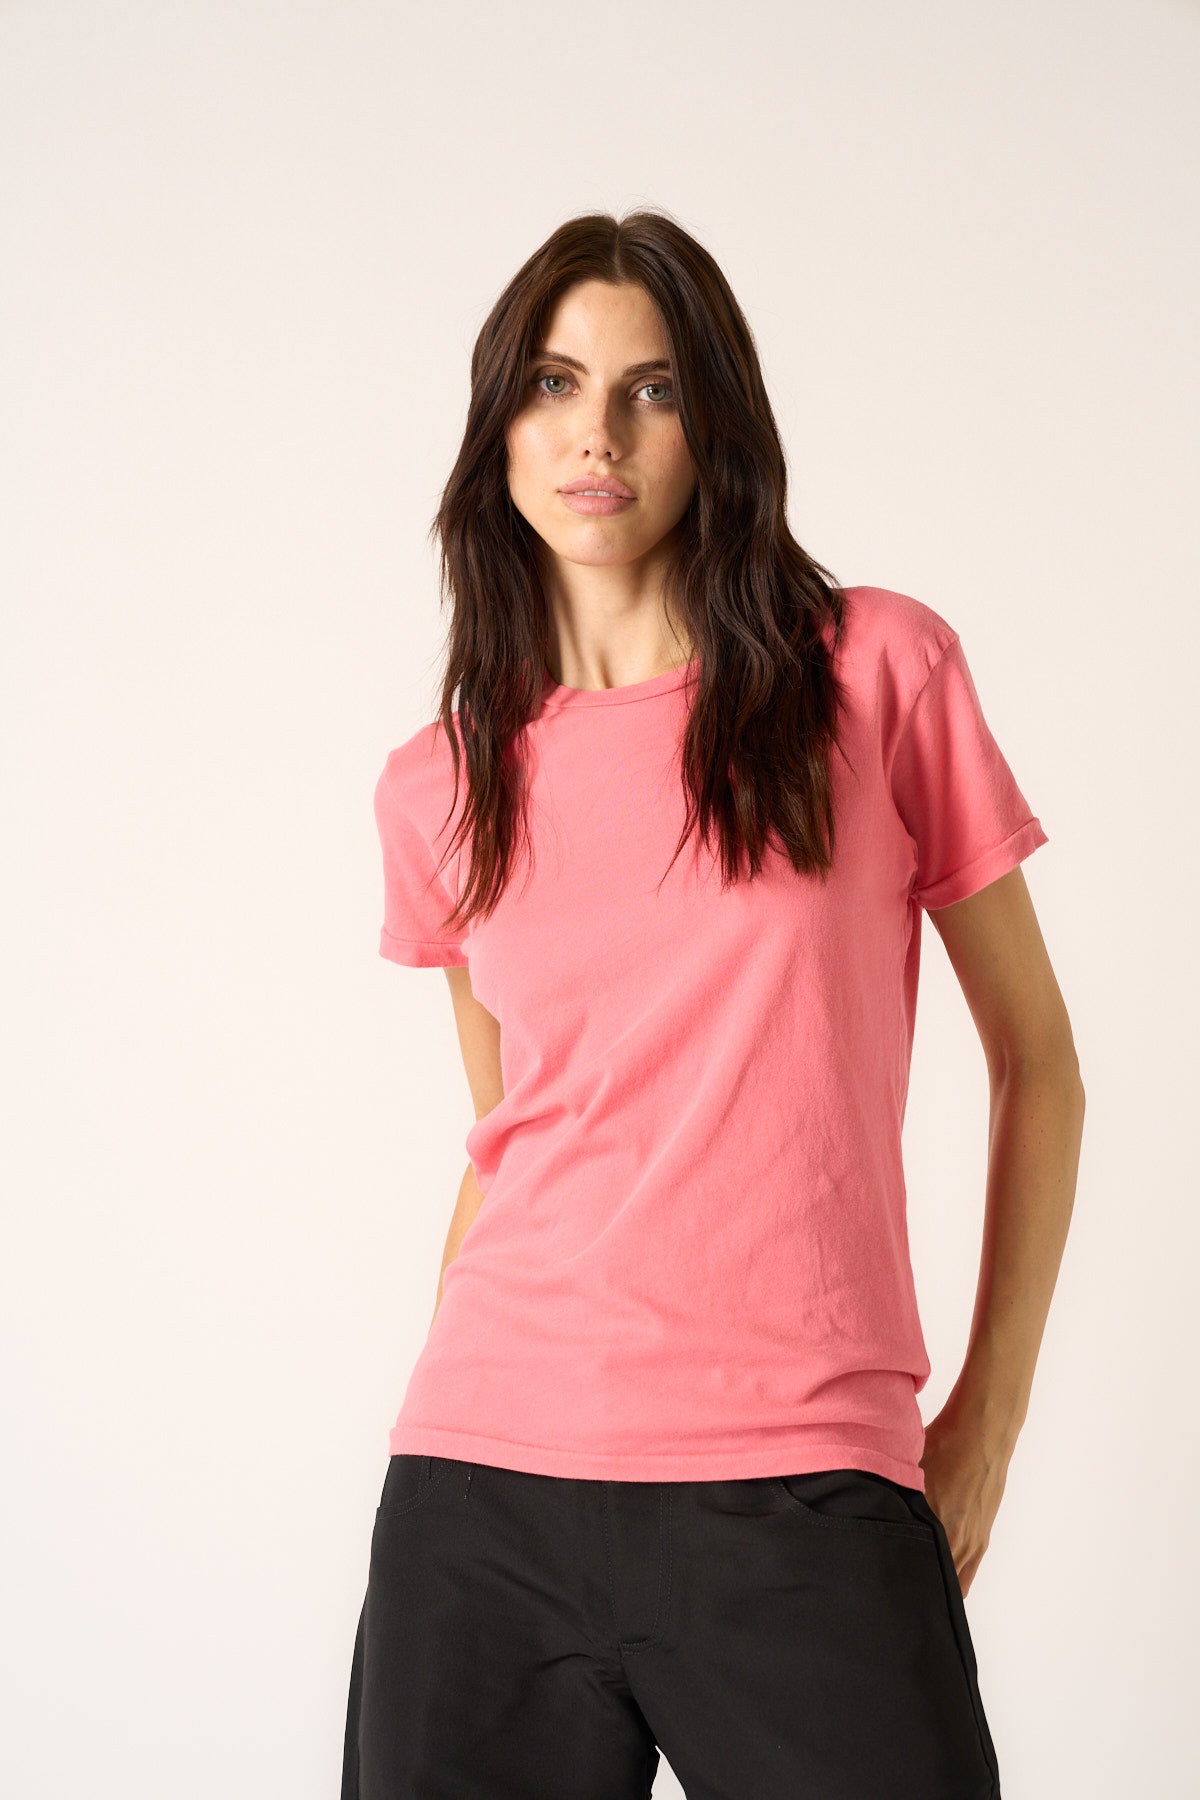 Kelly Cole Unisex Signature Blank T-Shirt - Charcoal